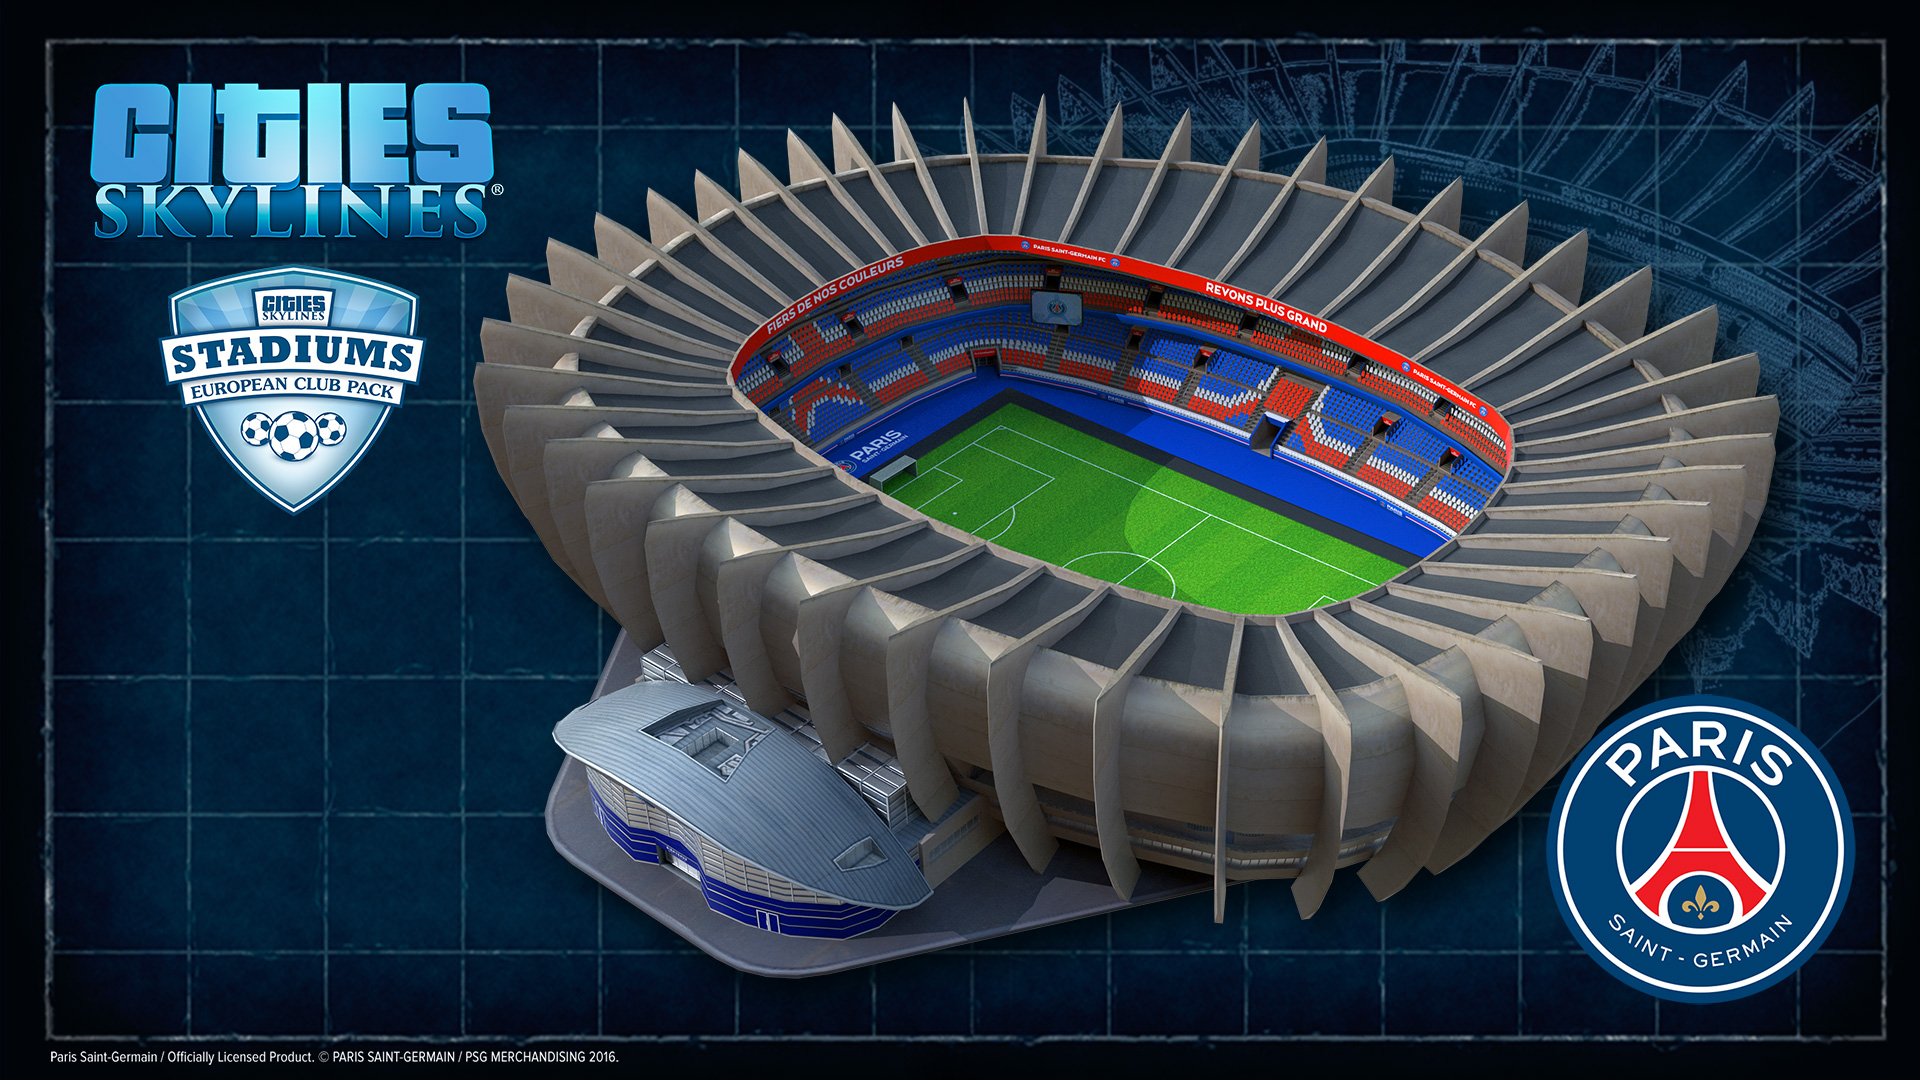 Cities: Skylines - Stadiums: European Club Pack screenshot